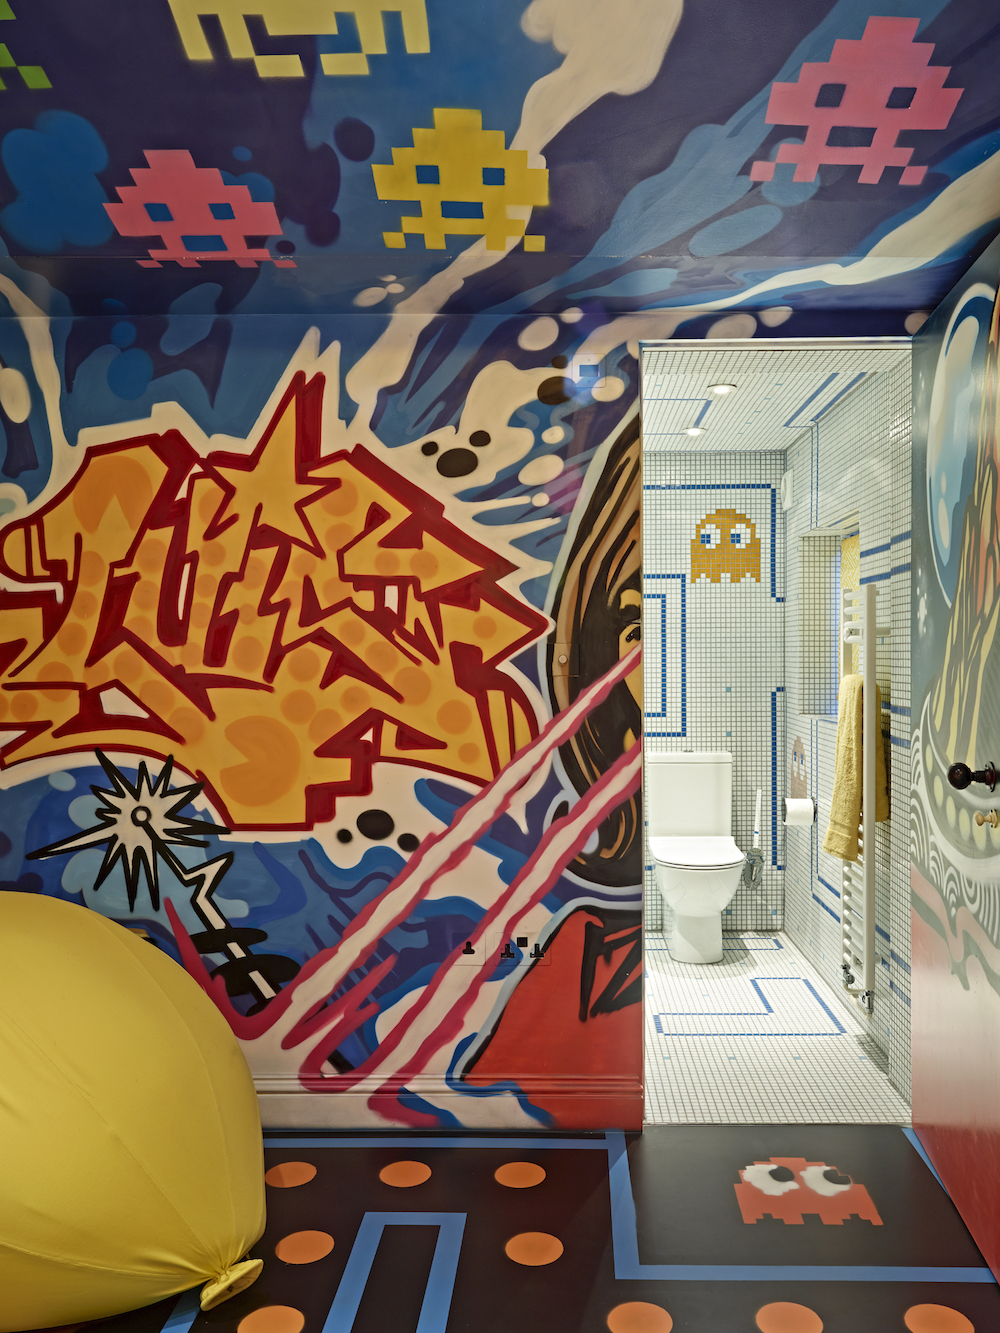 graffiti game room walls